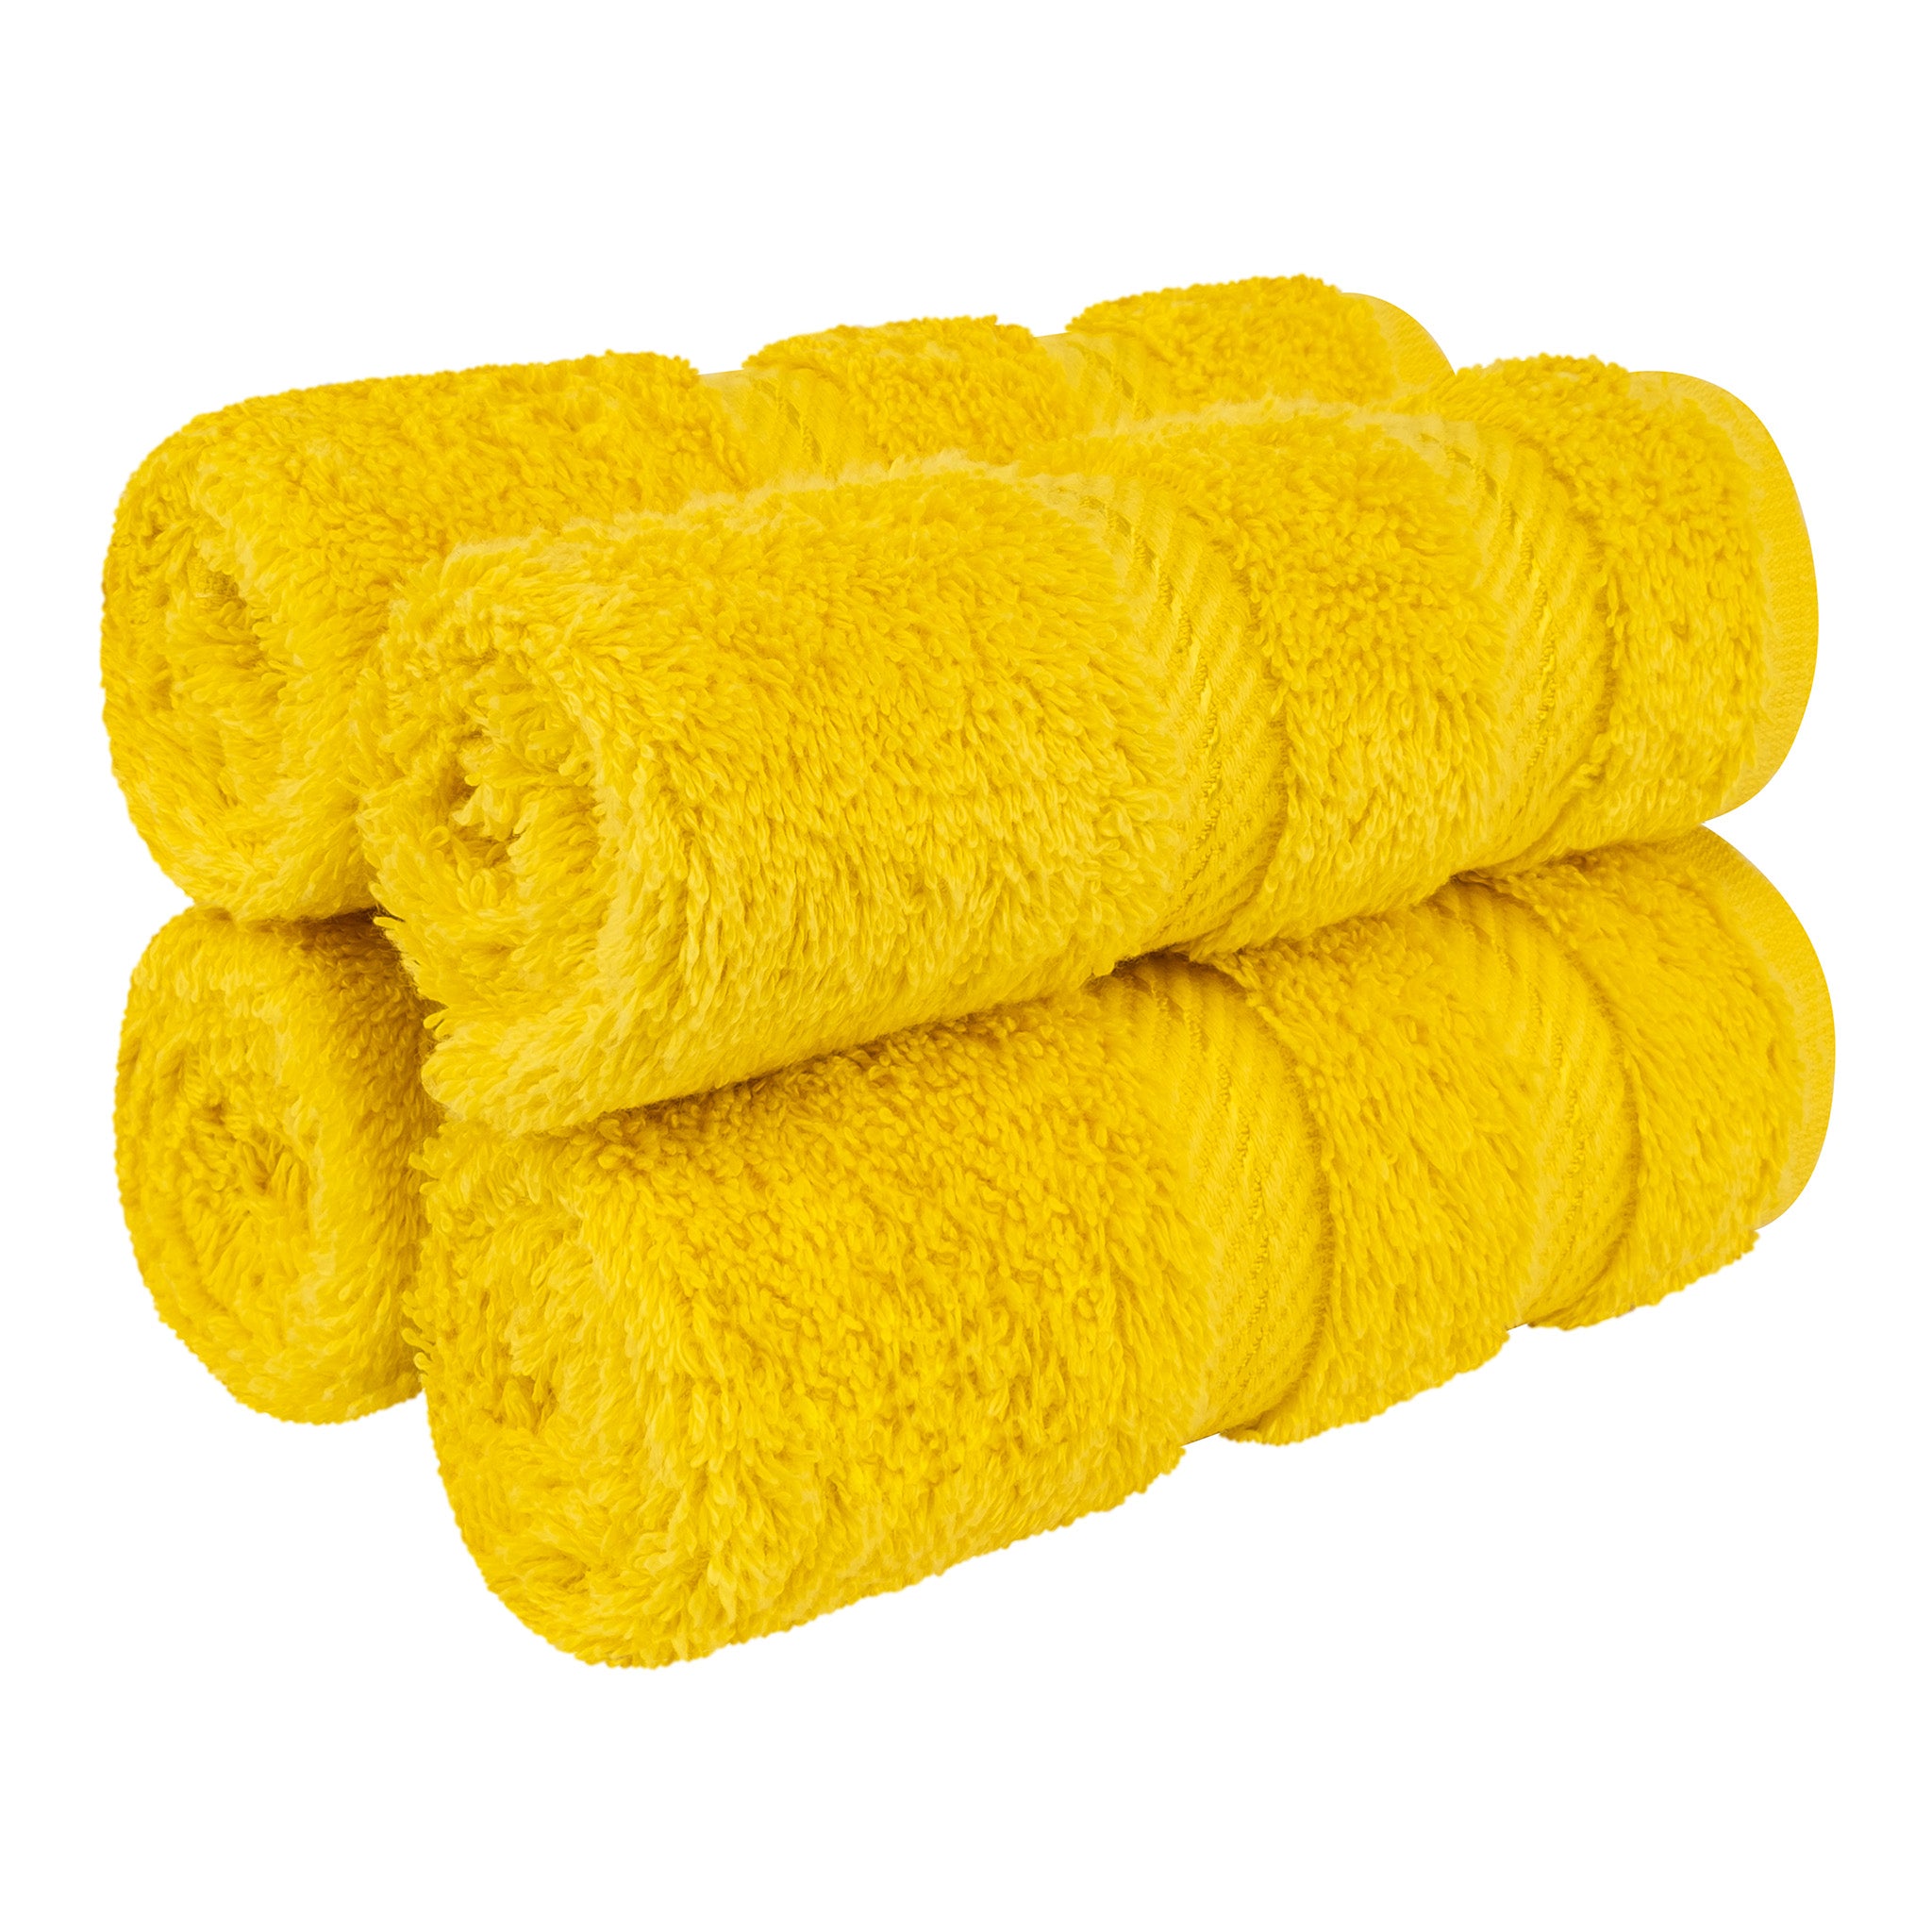 Laina Turkish Cotton 4-piece Bath Towel Set - 8239922